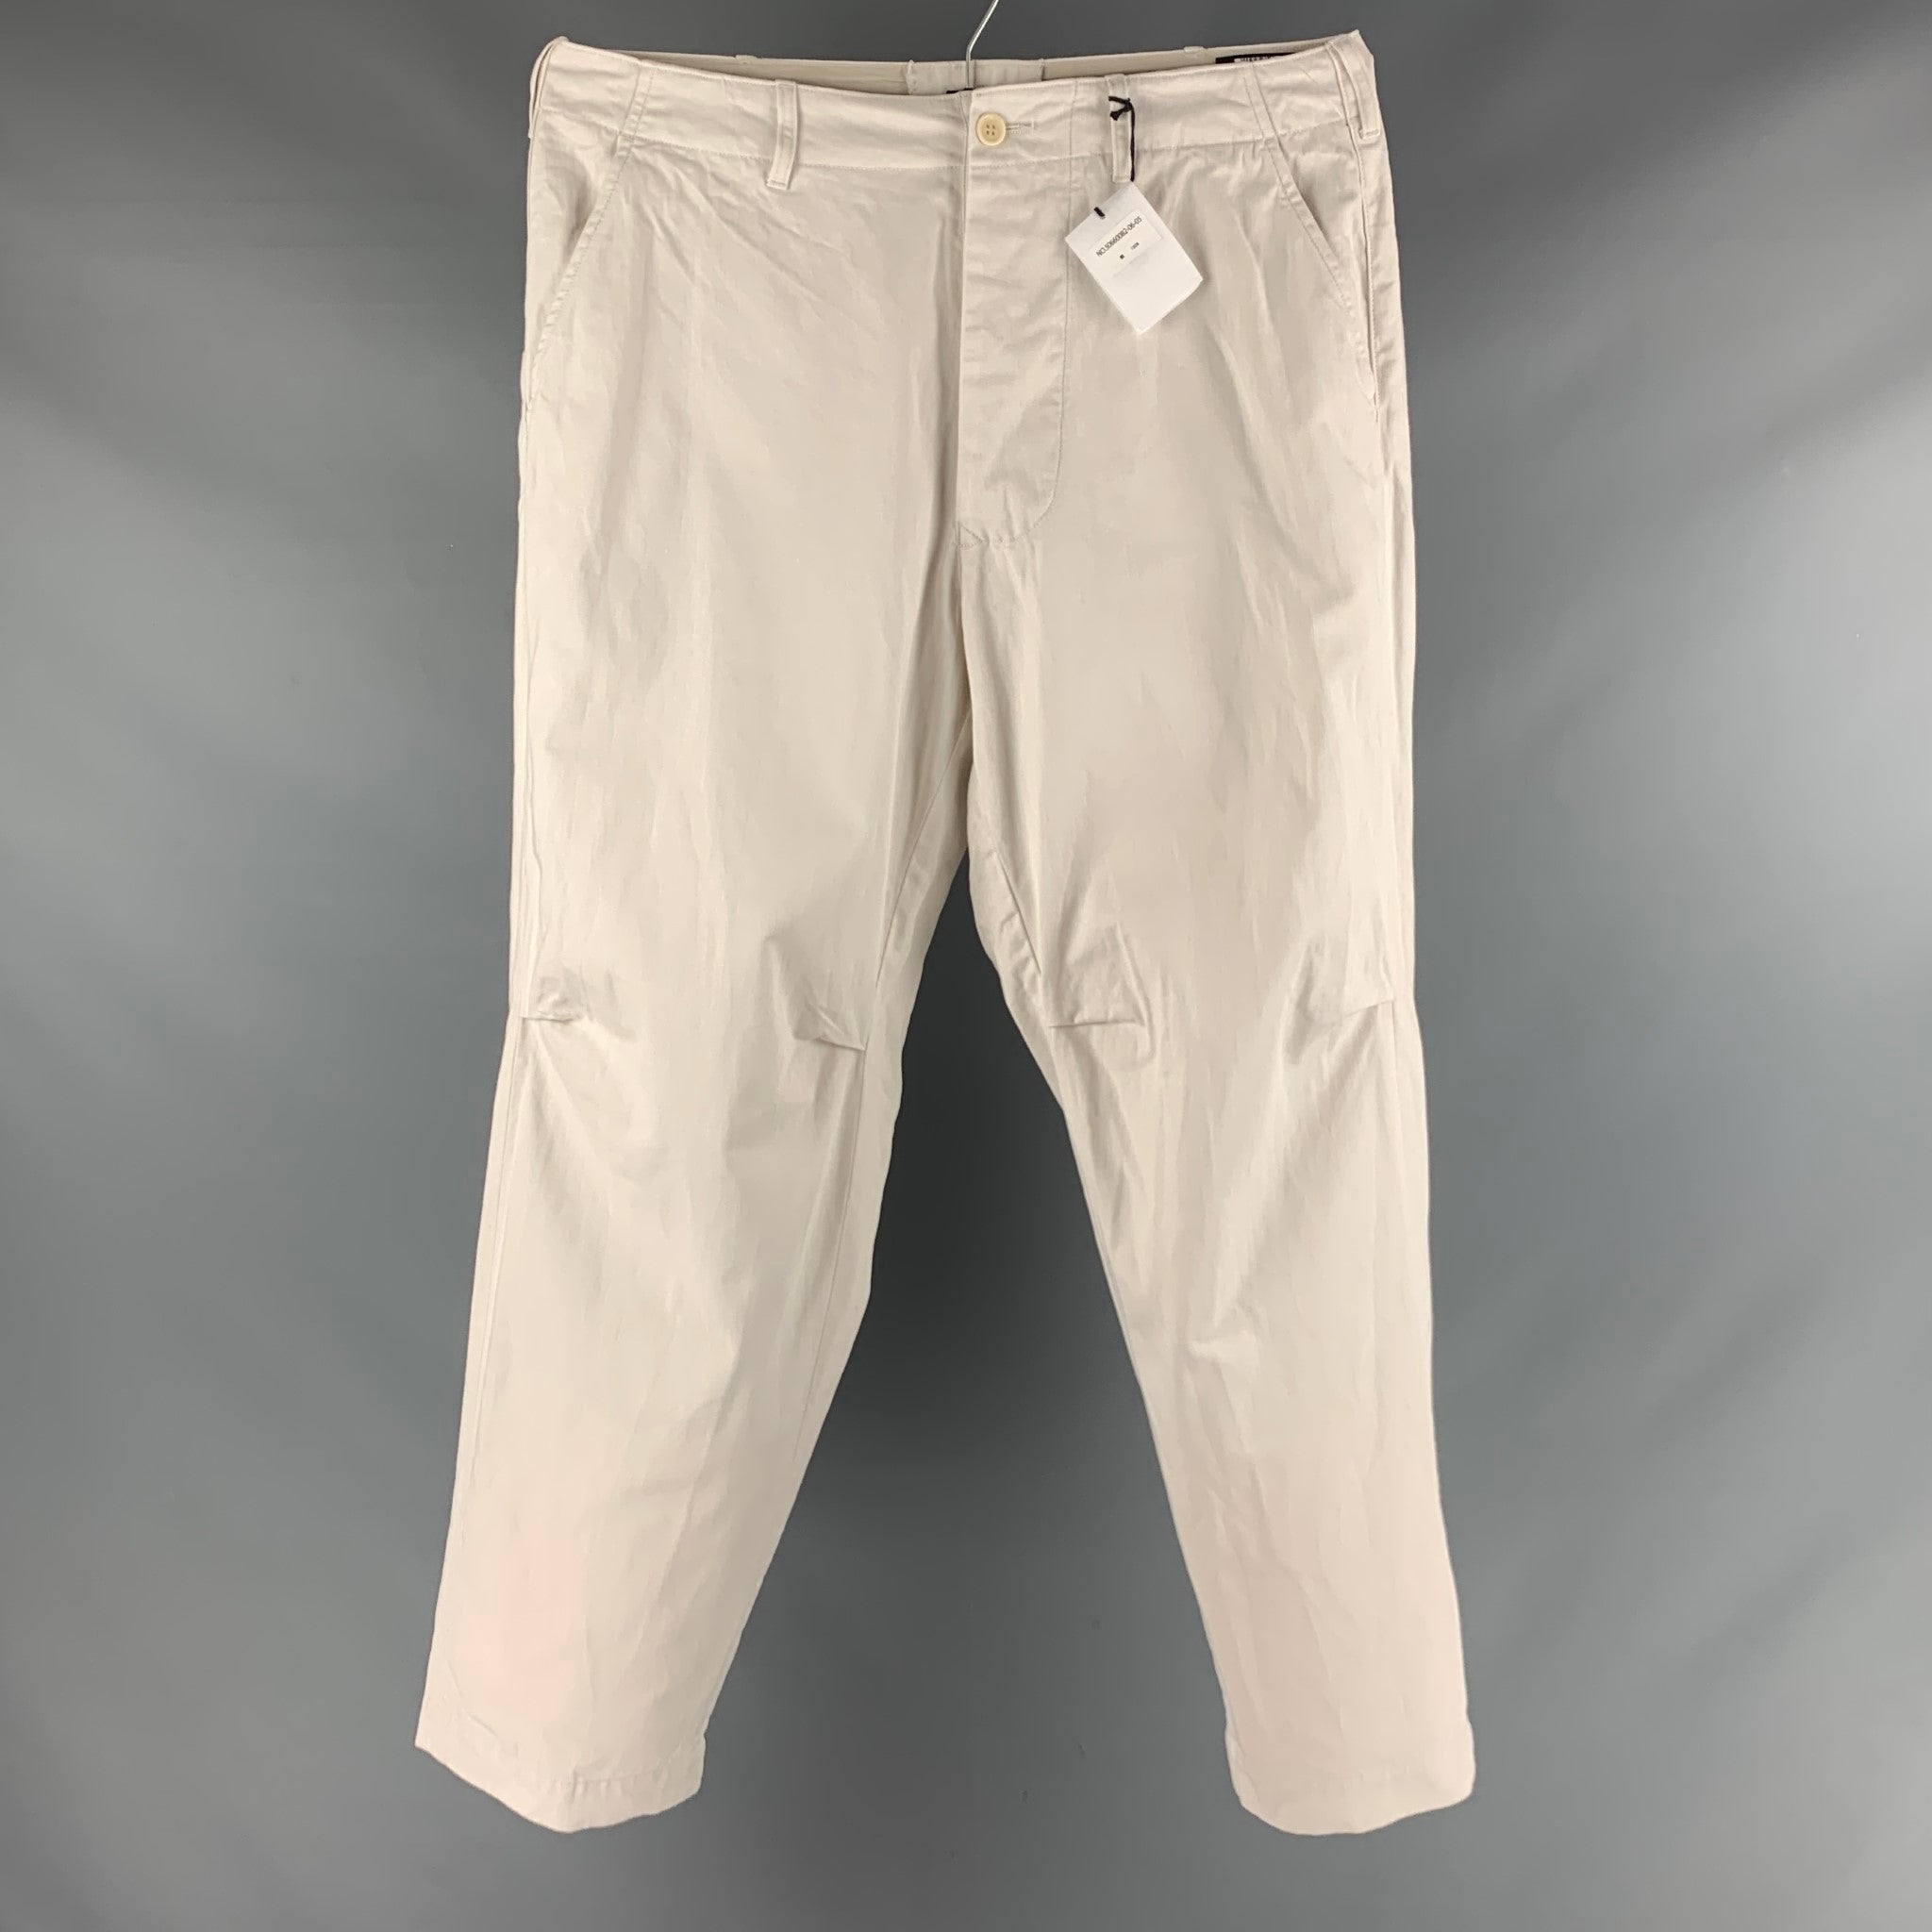 Isha Life Panchakacham Dhoti Unisex Dhoti Pants for both casual (Off - White)  | eBay